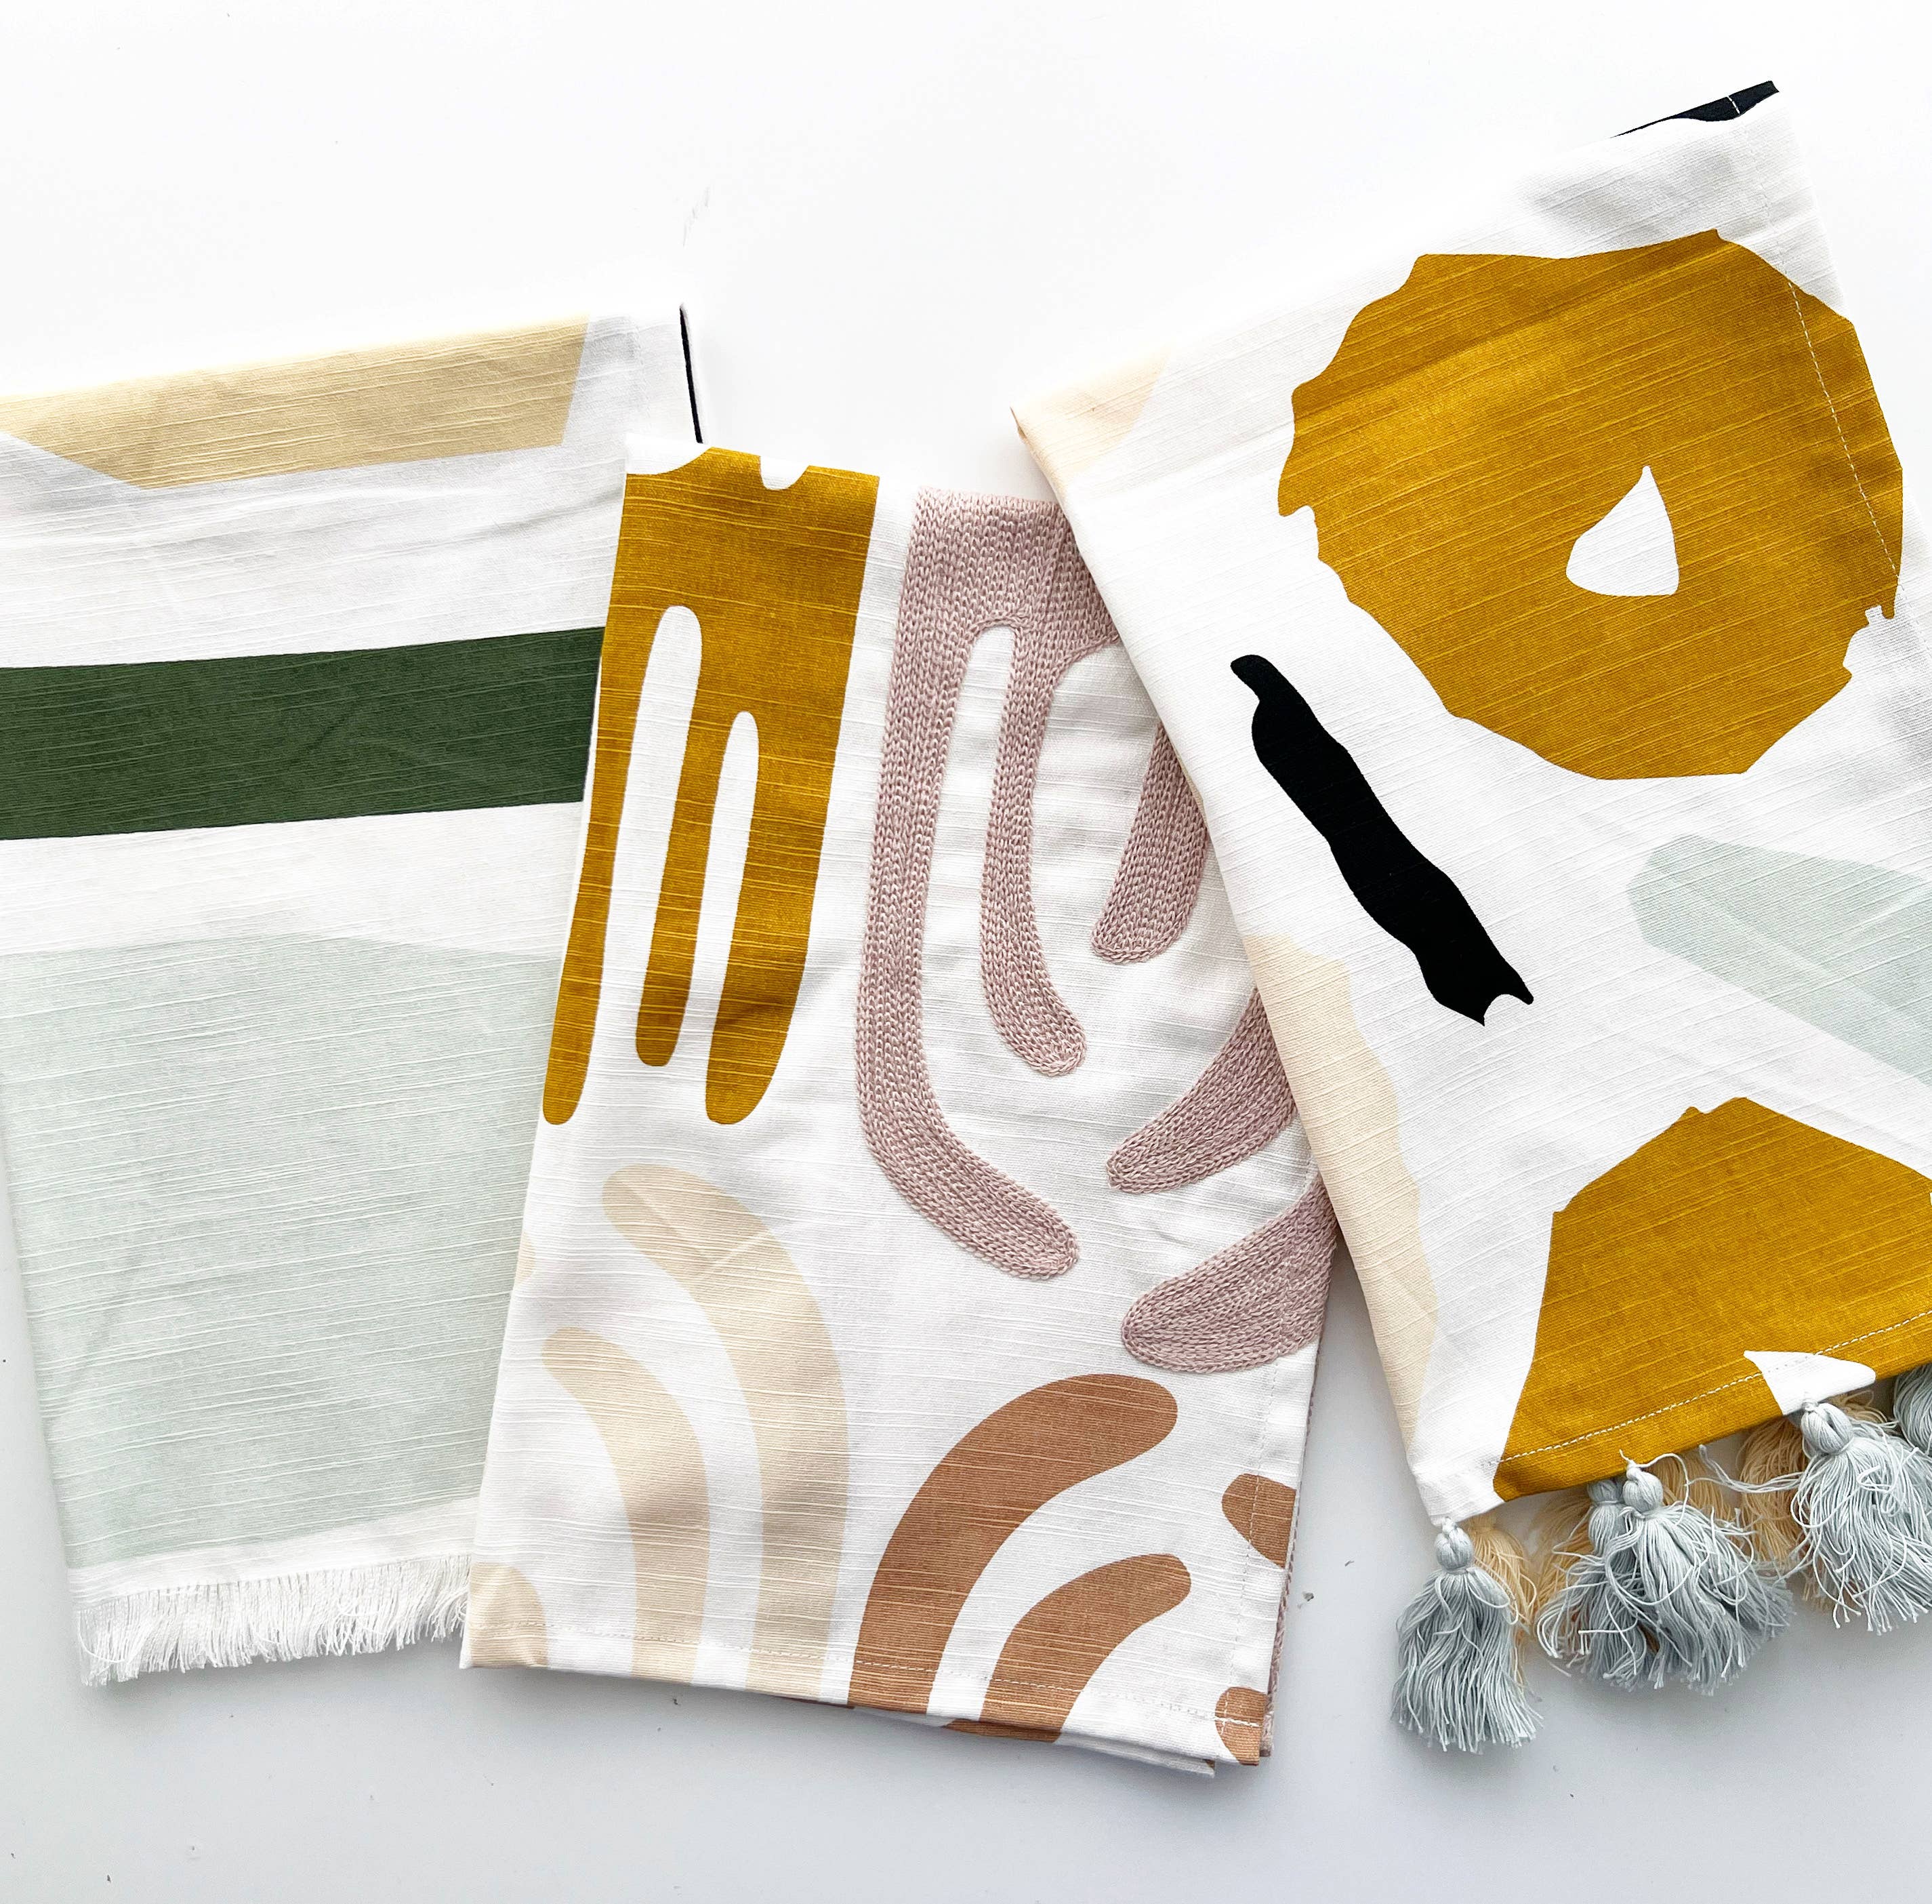 Tea Towels - 3 Different Designs of Modern, Textured Tea Towels